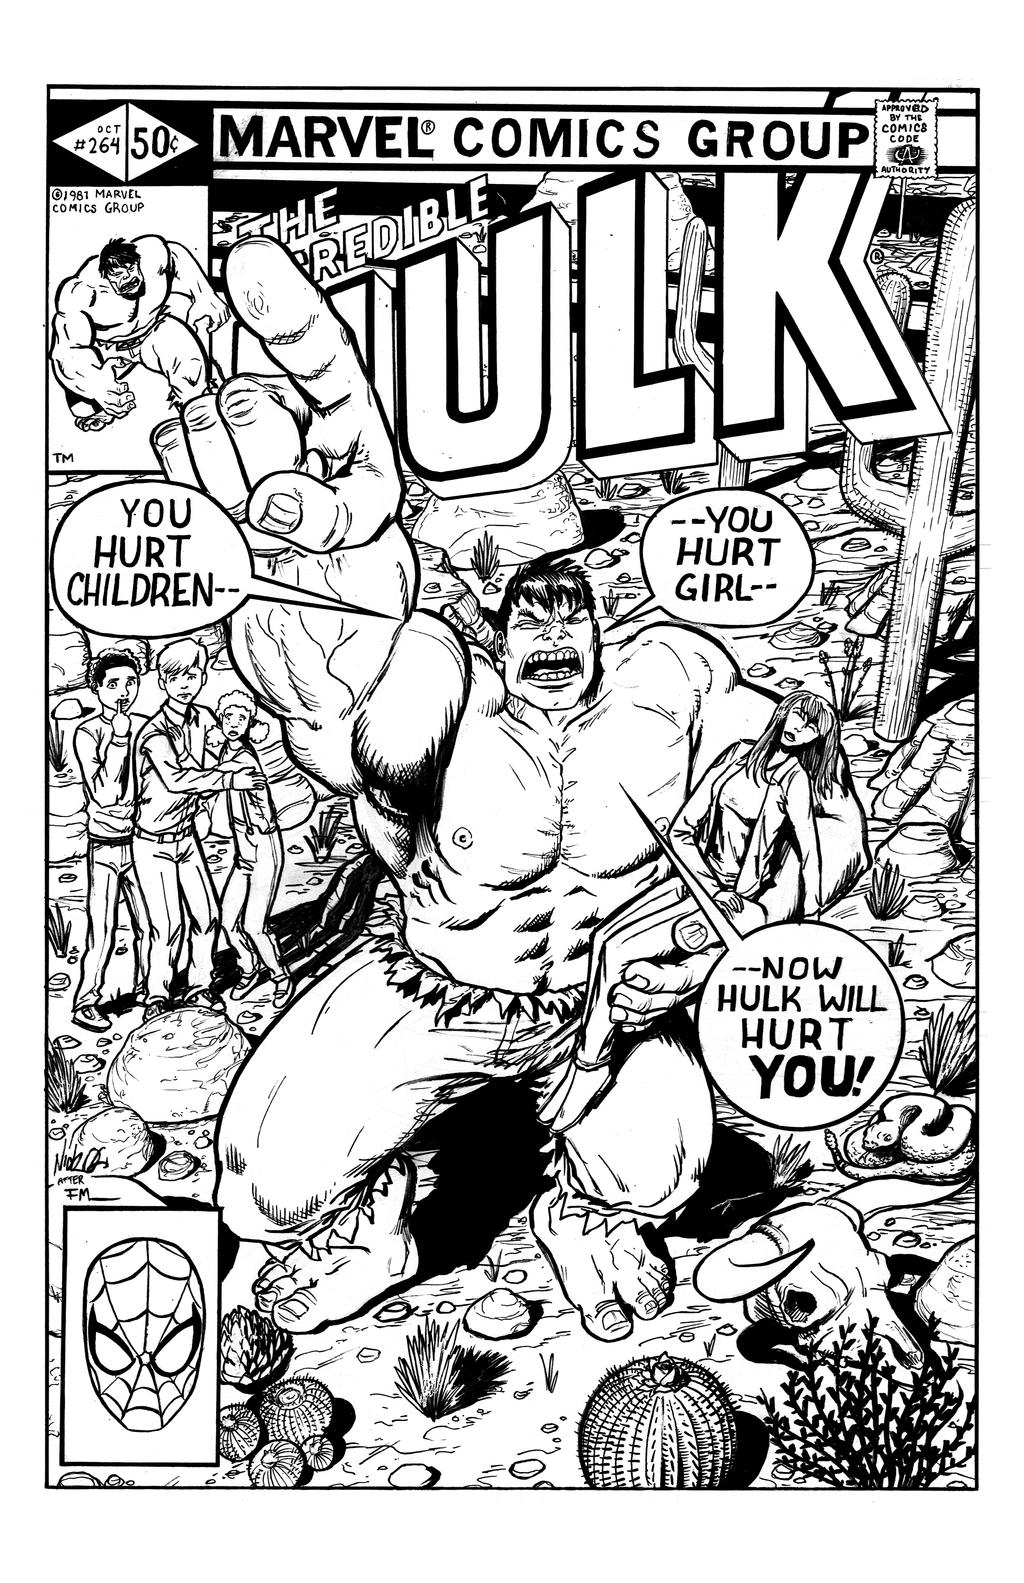 The Incredible Hulk #264 Cover Redux